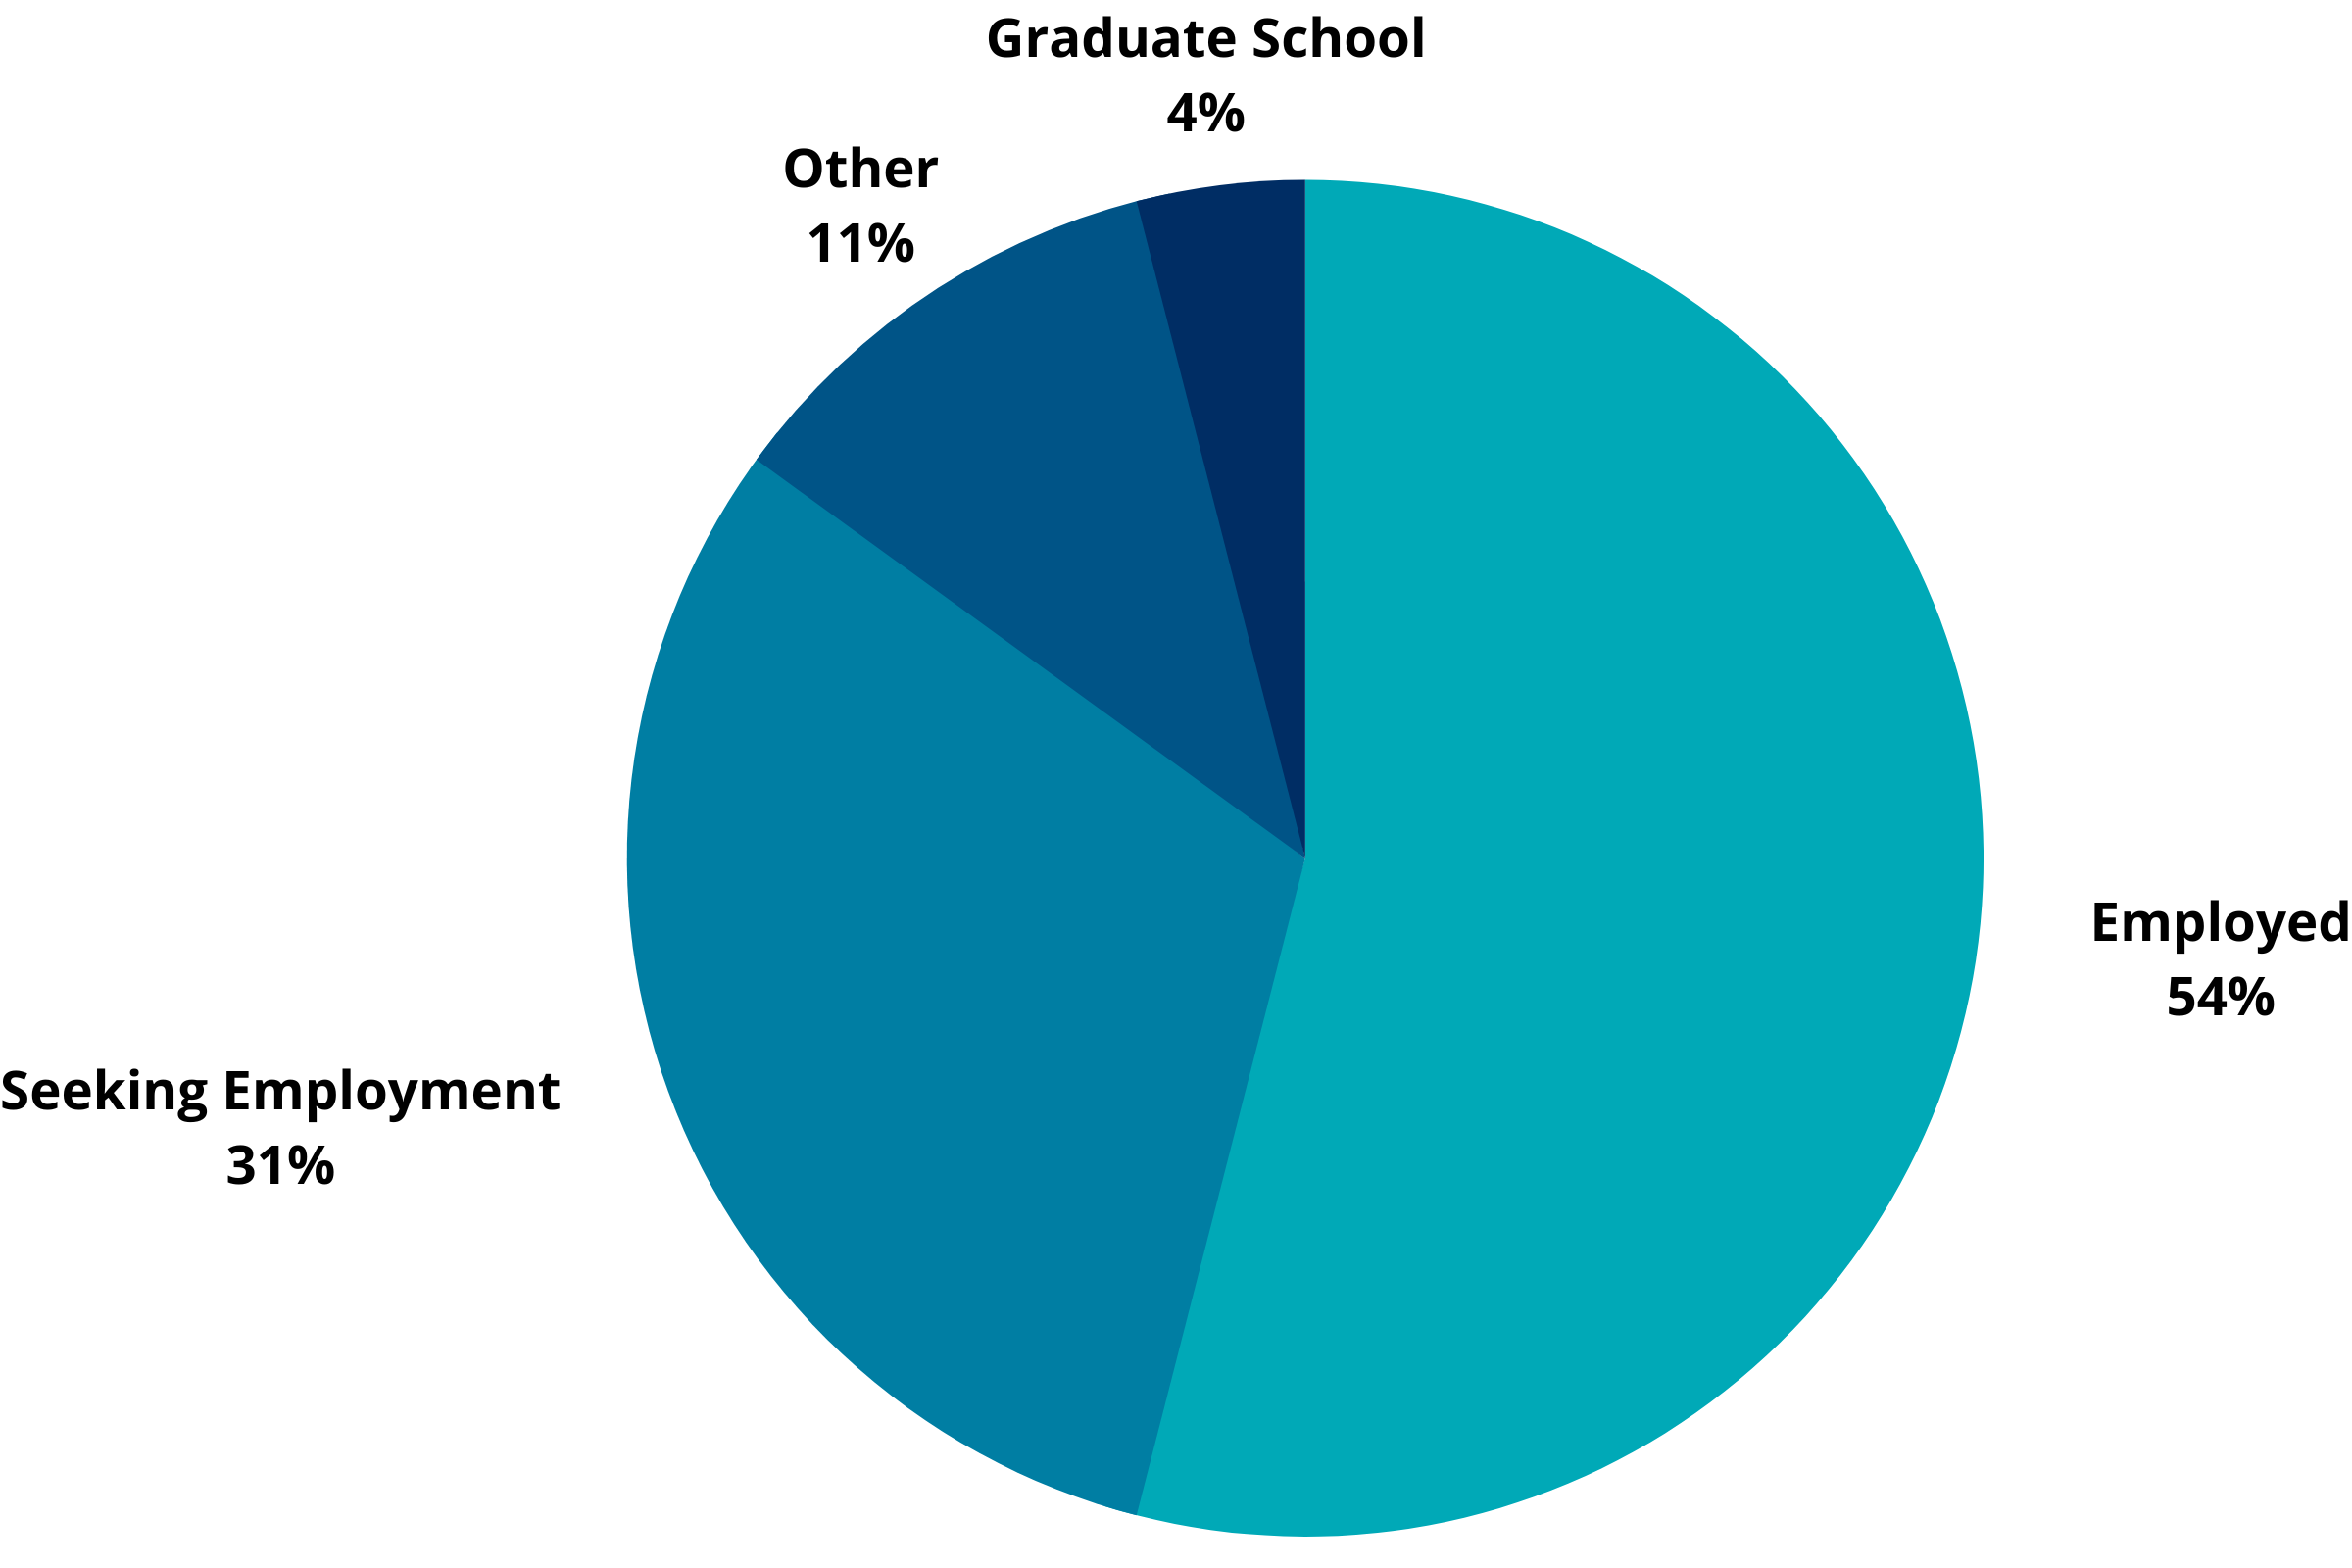 Employed 54%, Seeking employment 31%, Other 11%, Graduate School 4%